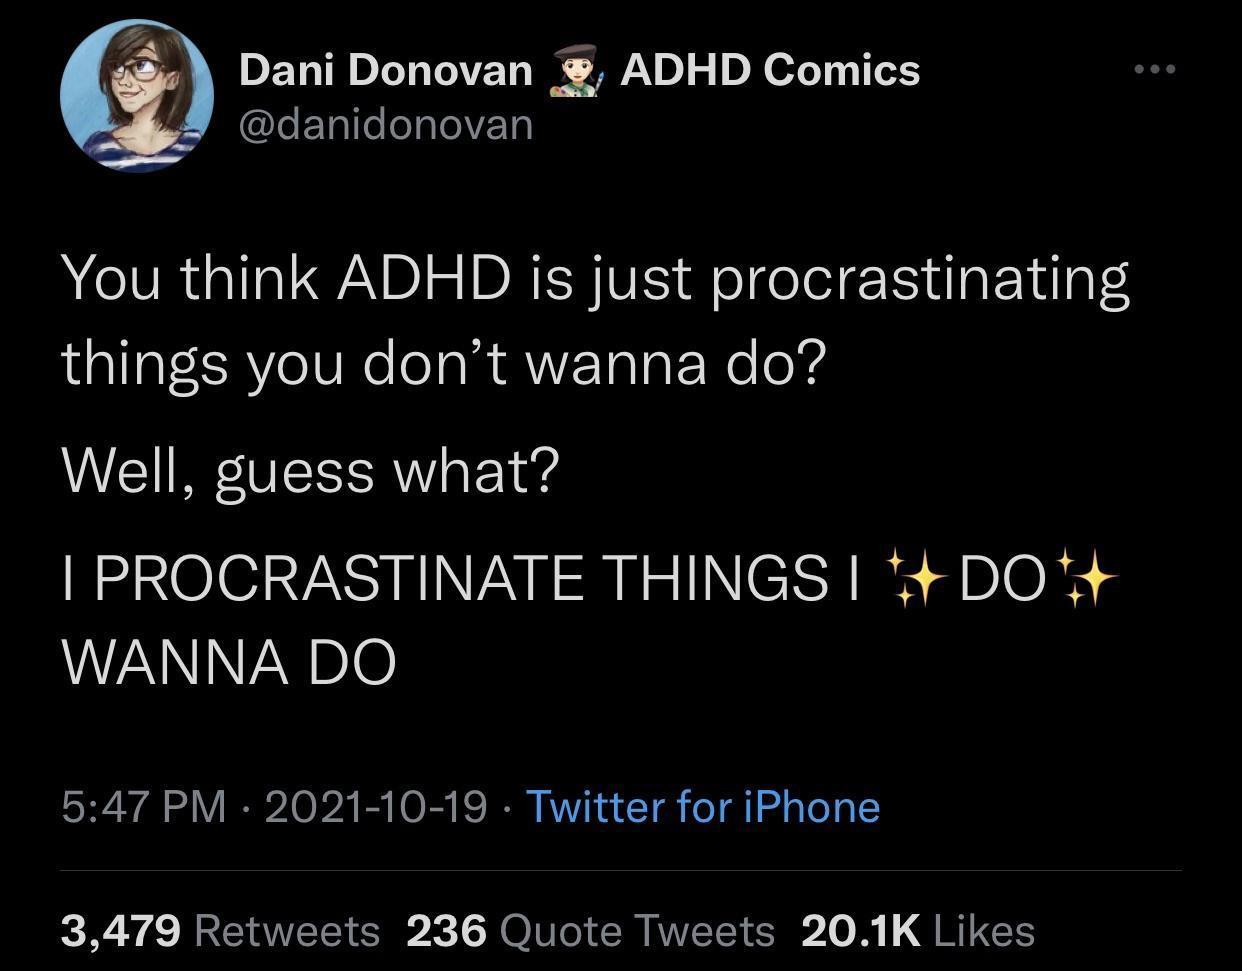 procrastinate+everything